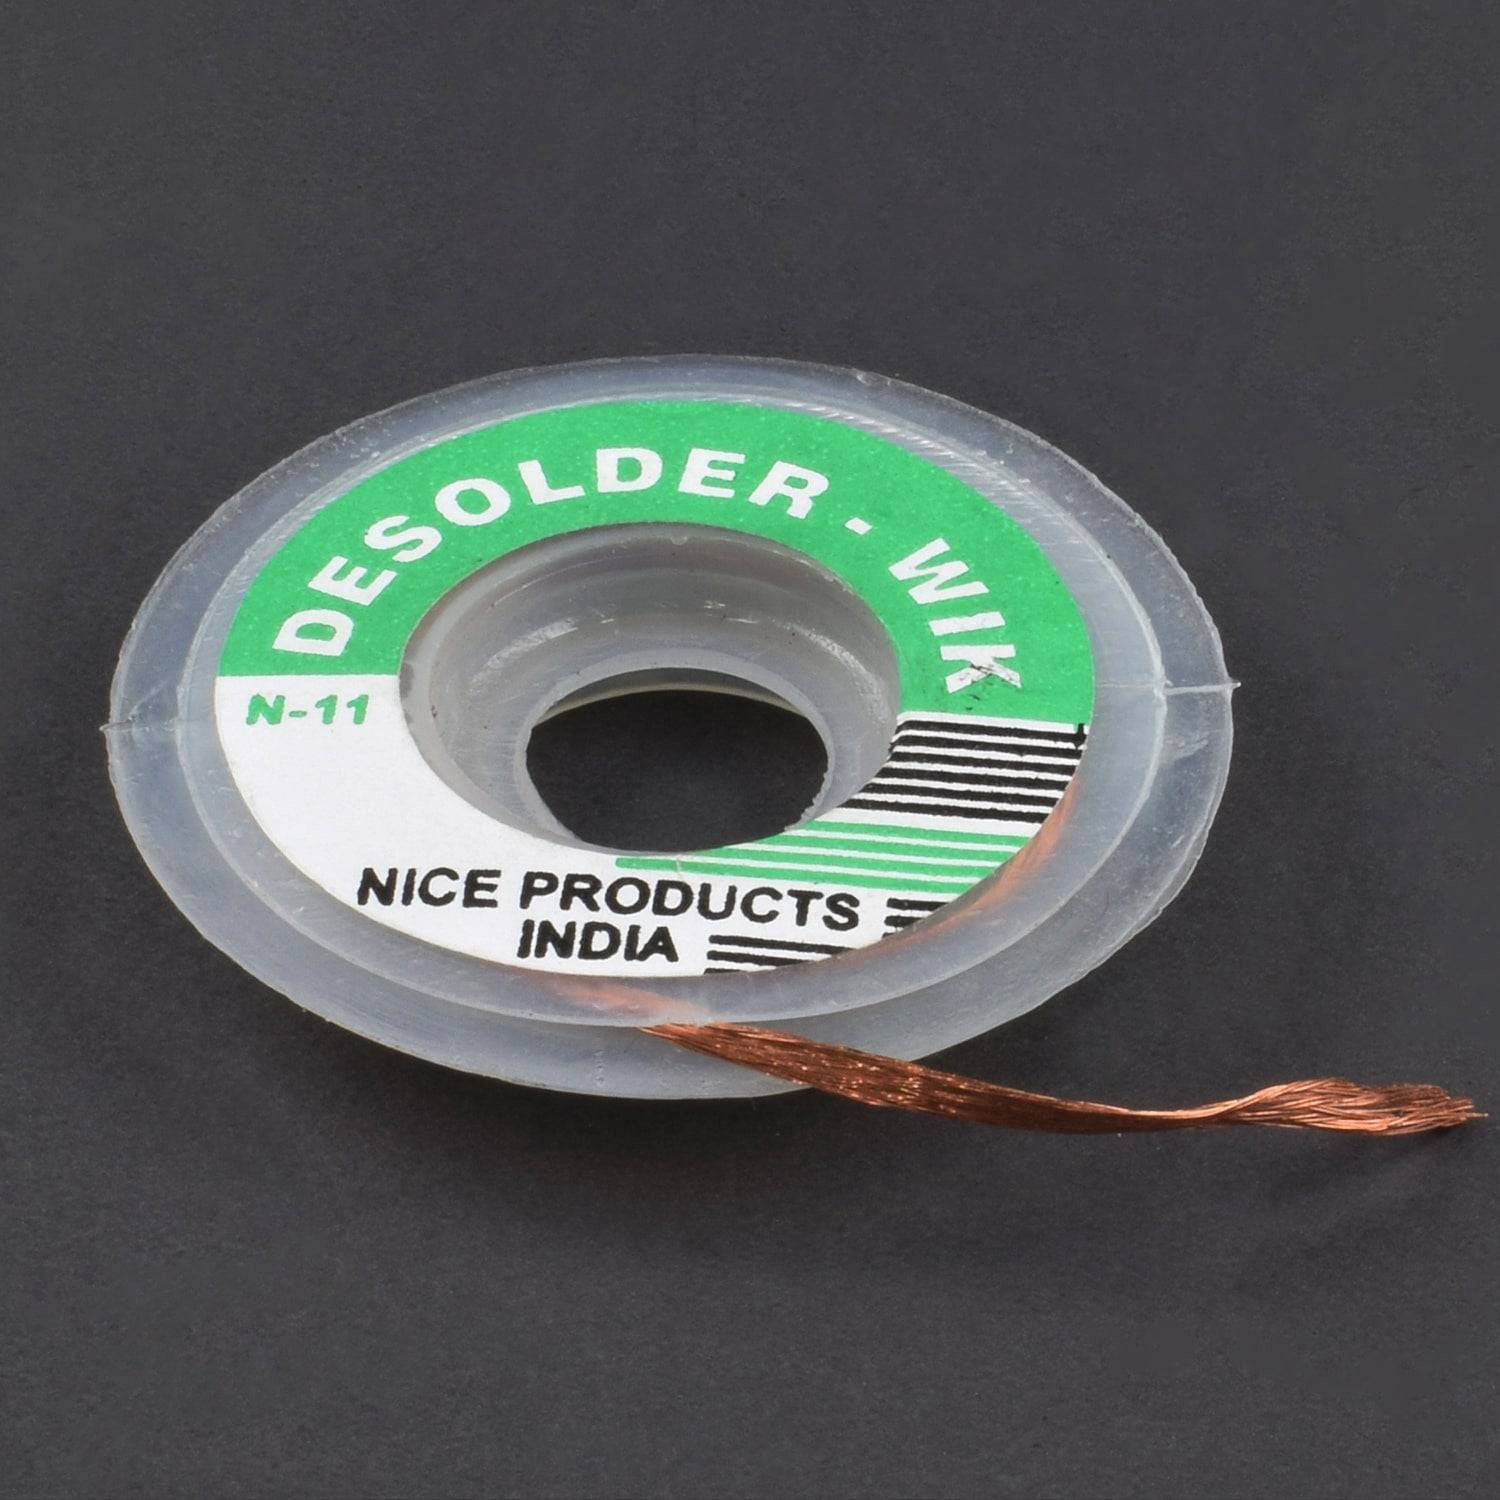 Best Quality Solder DeSoldering Wire (de-soldering wick)  - TL013 - REES52